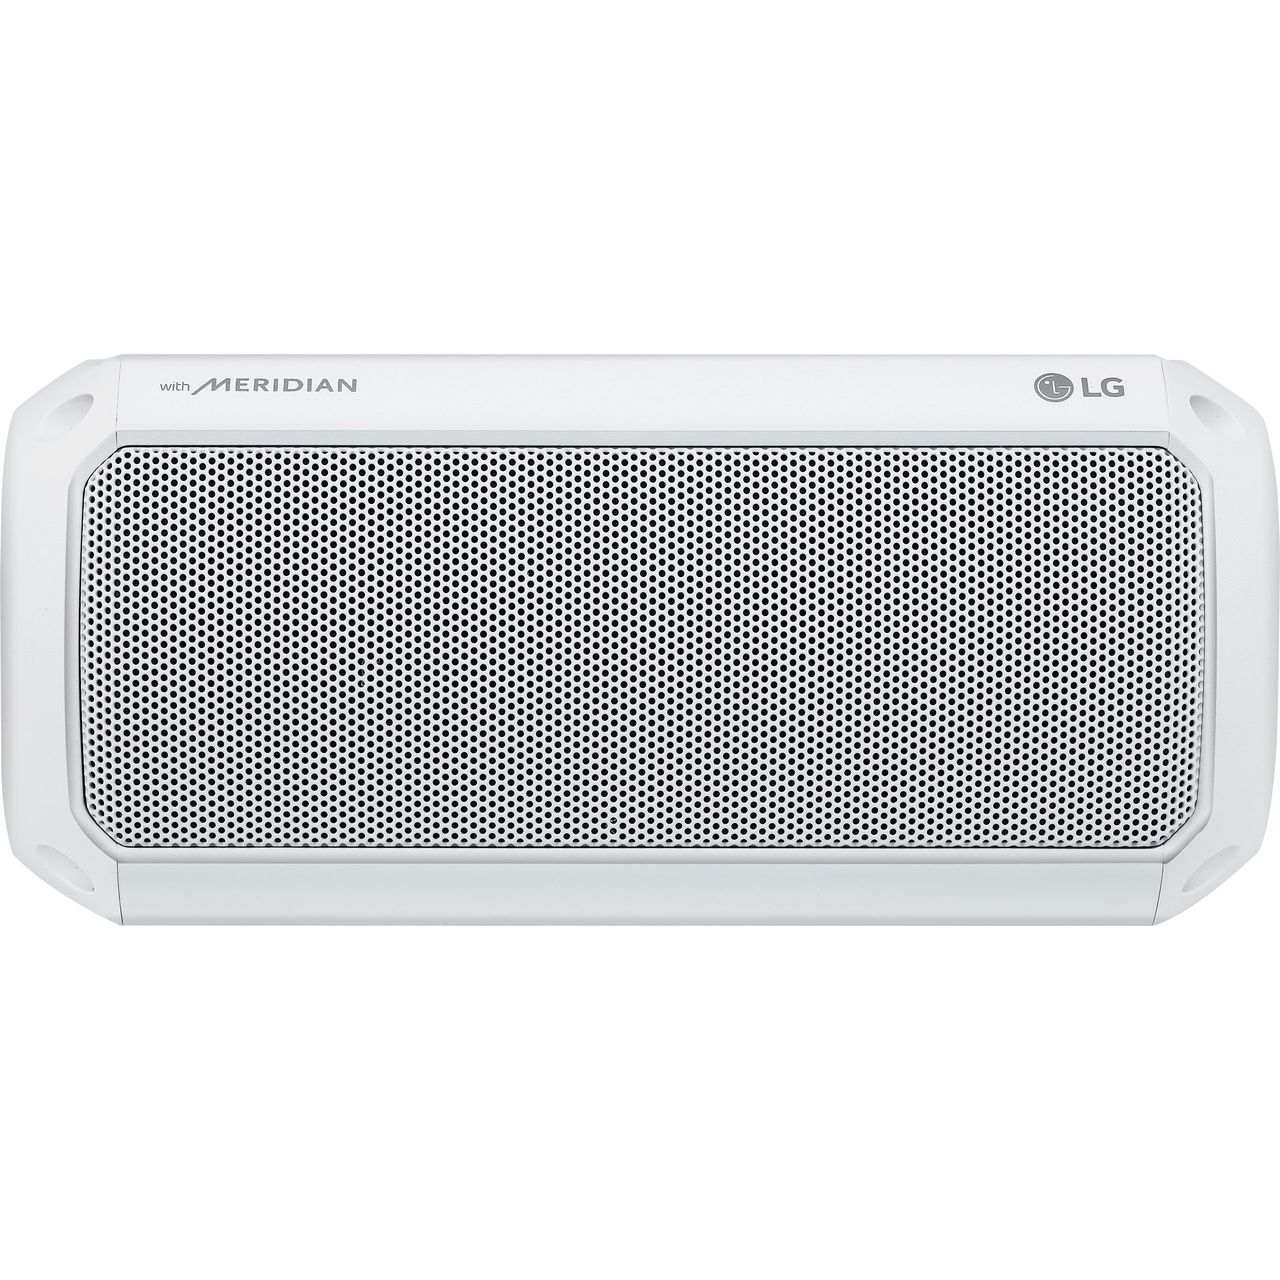 LG XBOOM Go Wireless Speaker Review